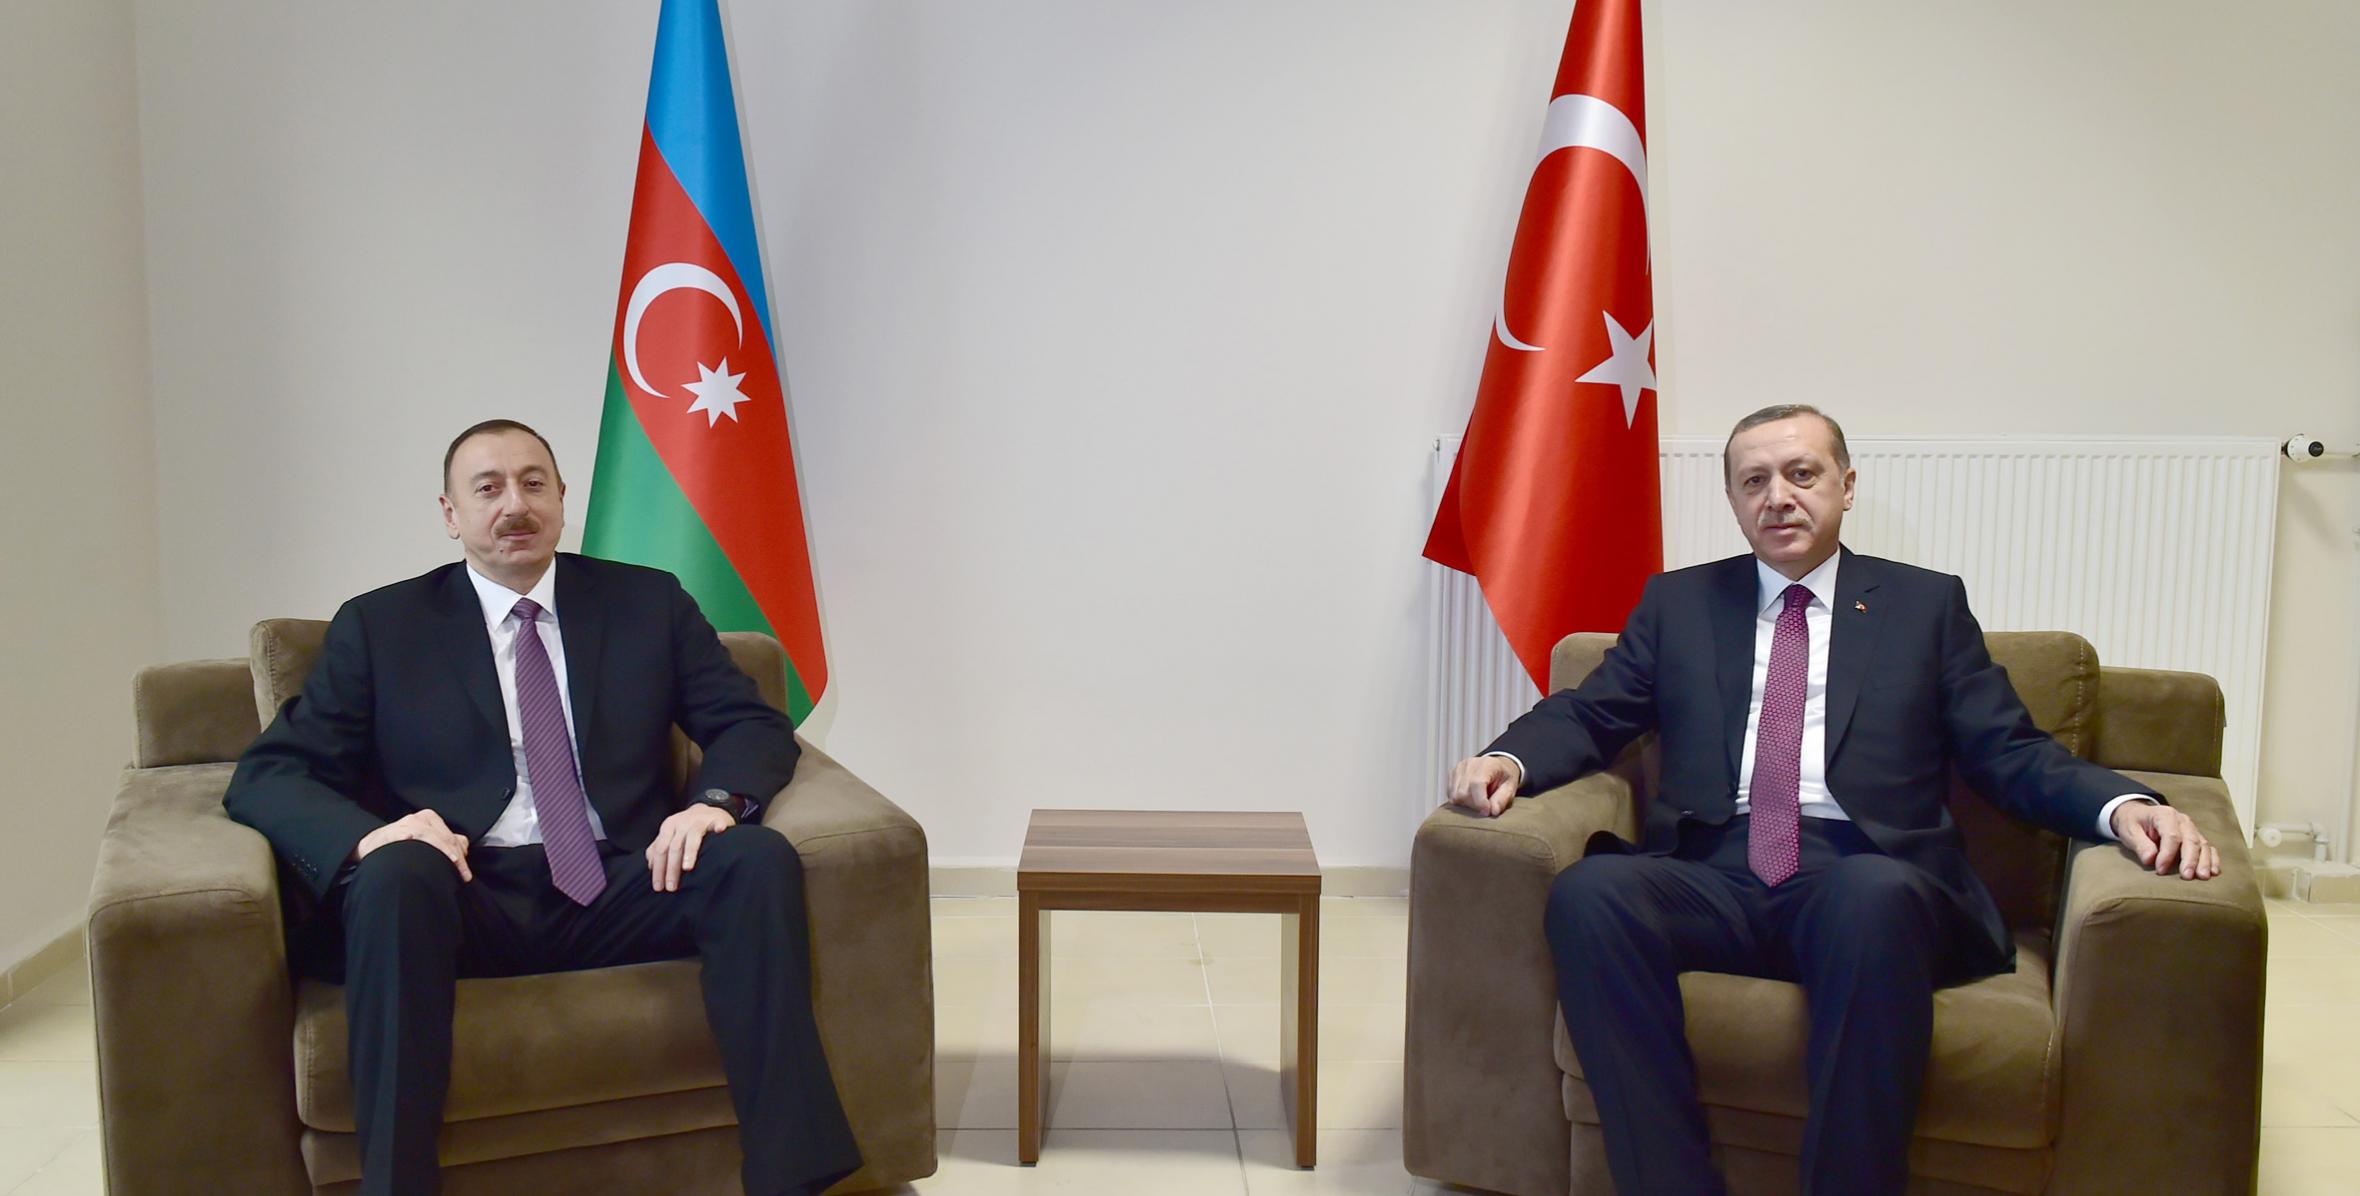 Ilham Aliyev met with President of Turkey Recep Tayyip Erdogan